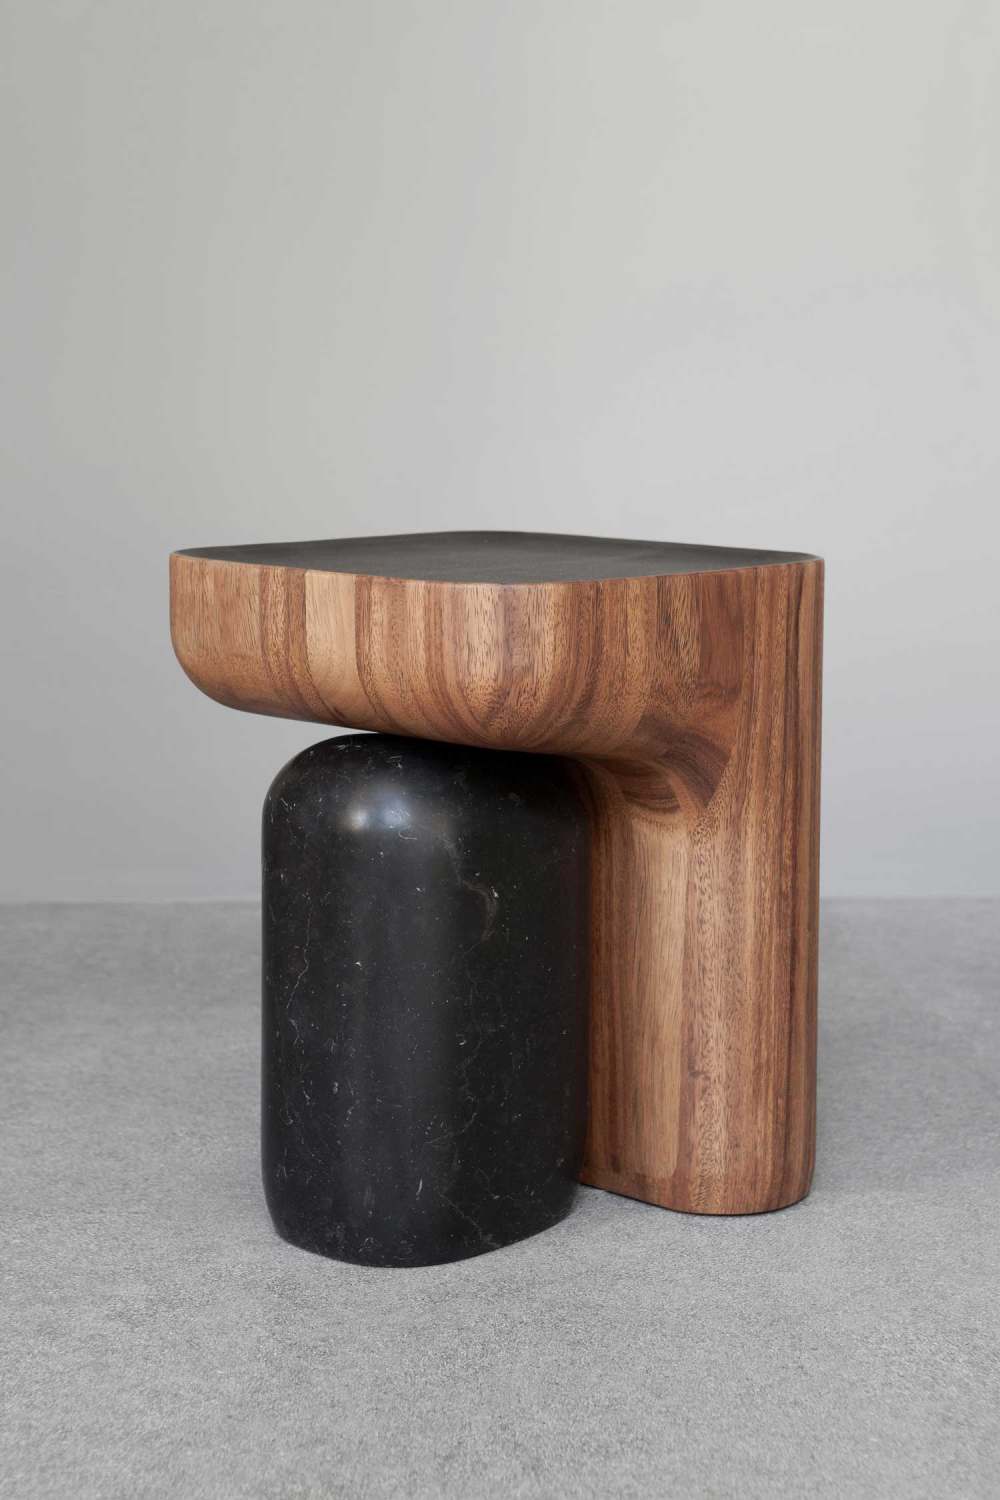 guillaume-delvigne-stools4tools-tools-gallrie-paris-rushi-02.jpg